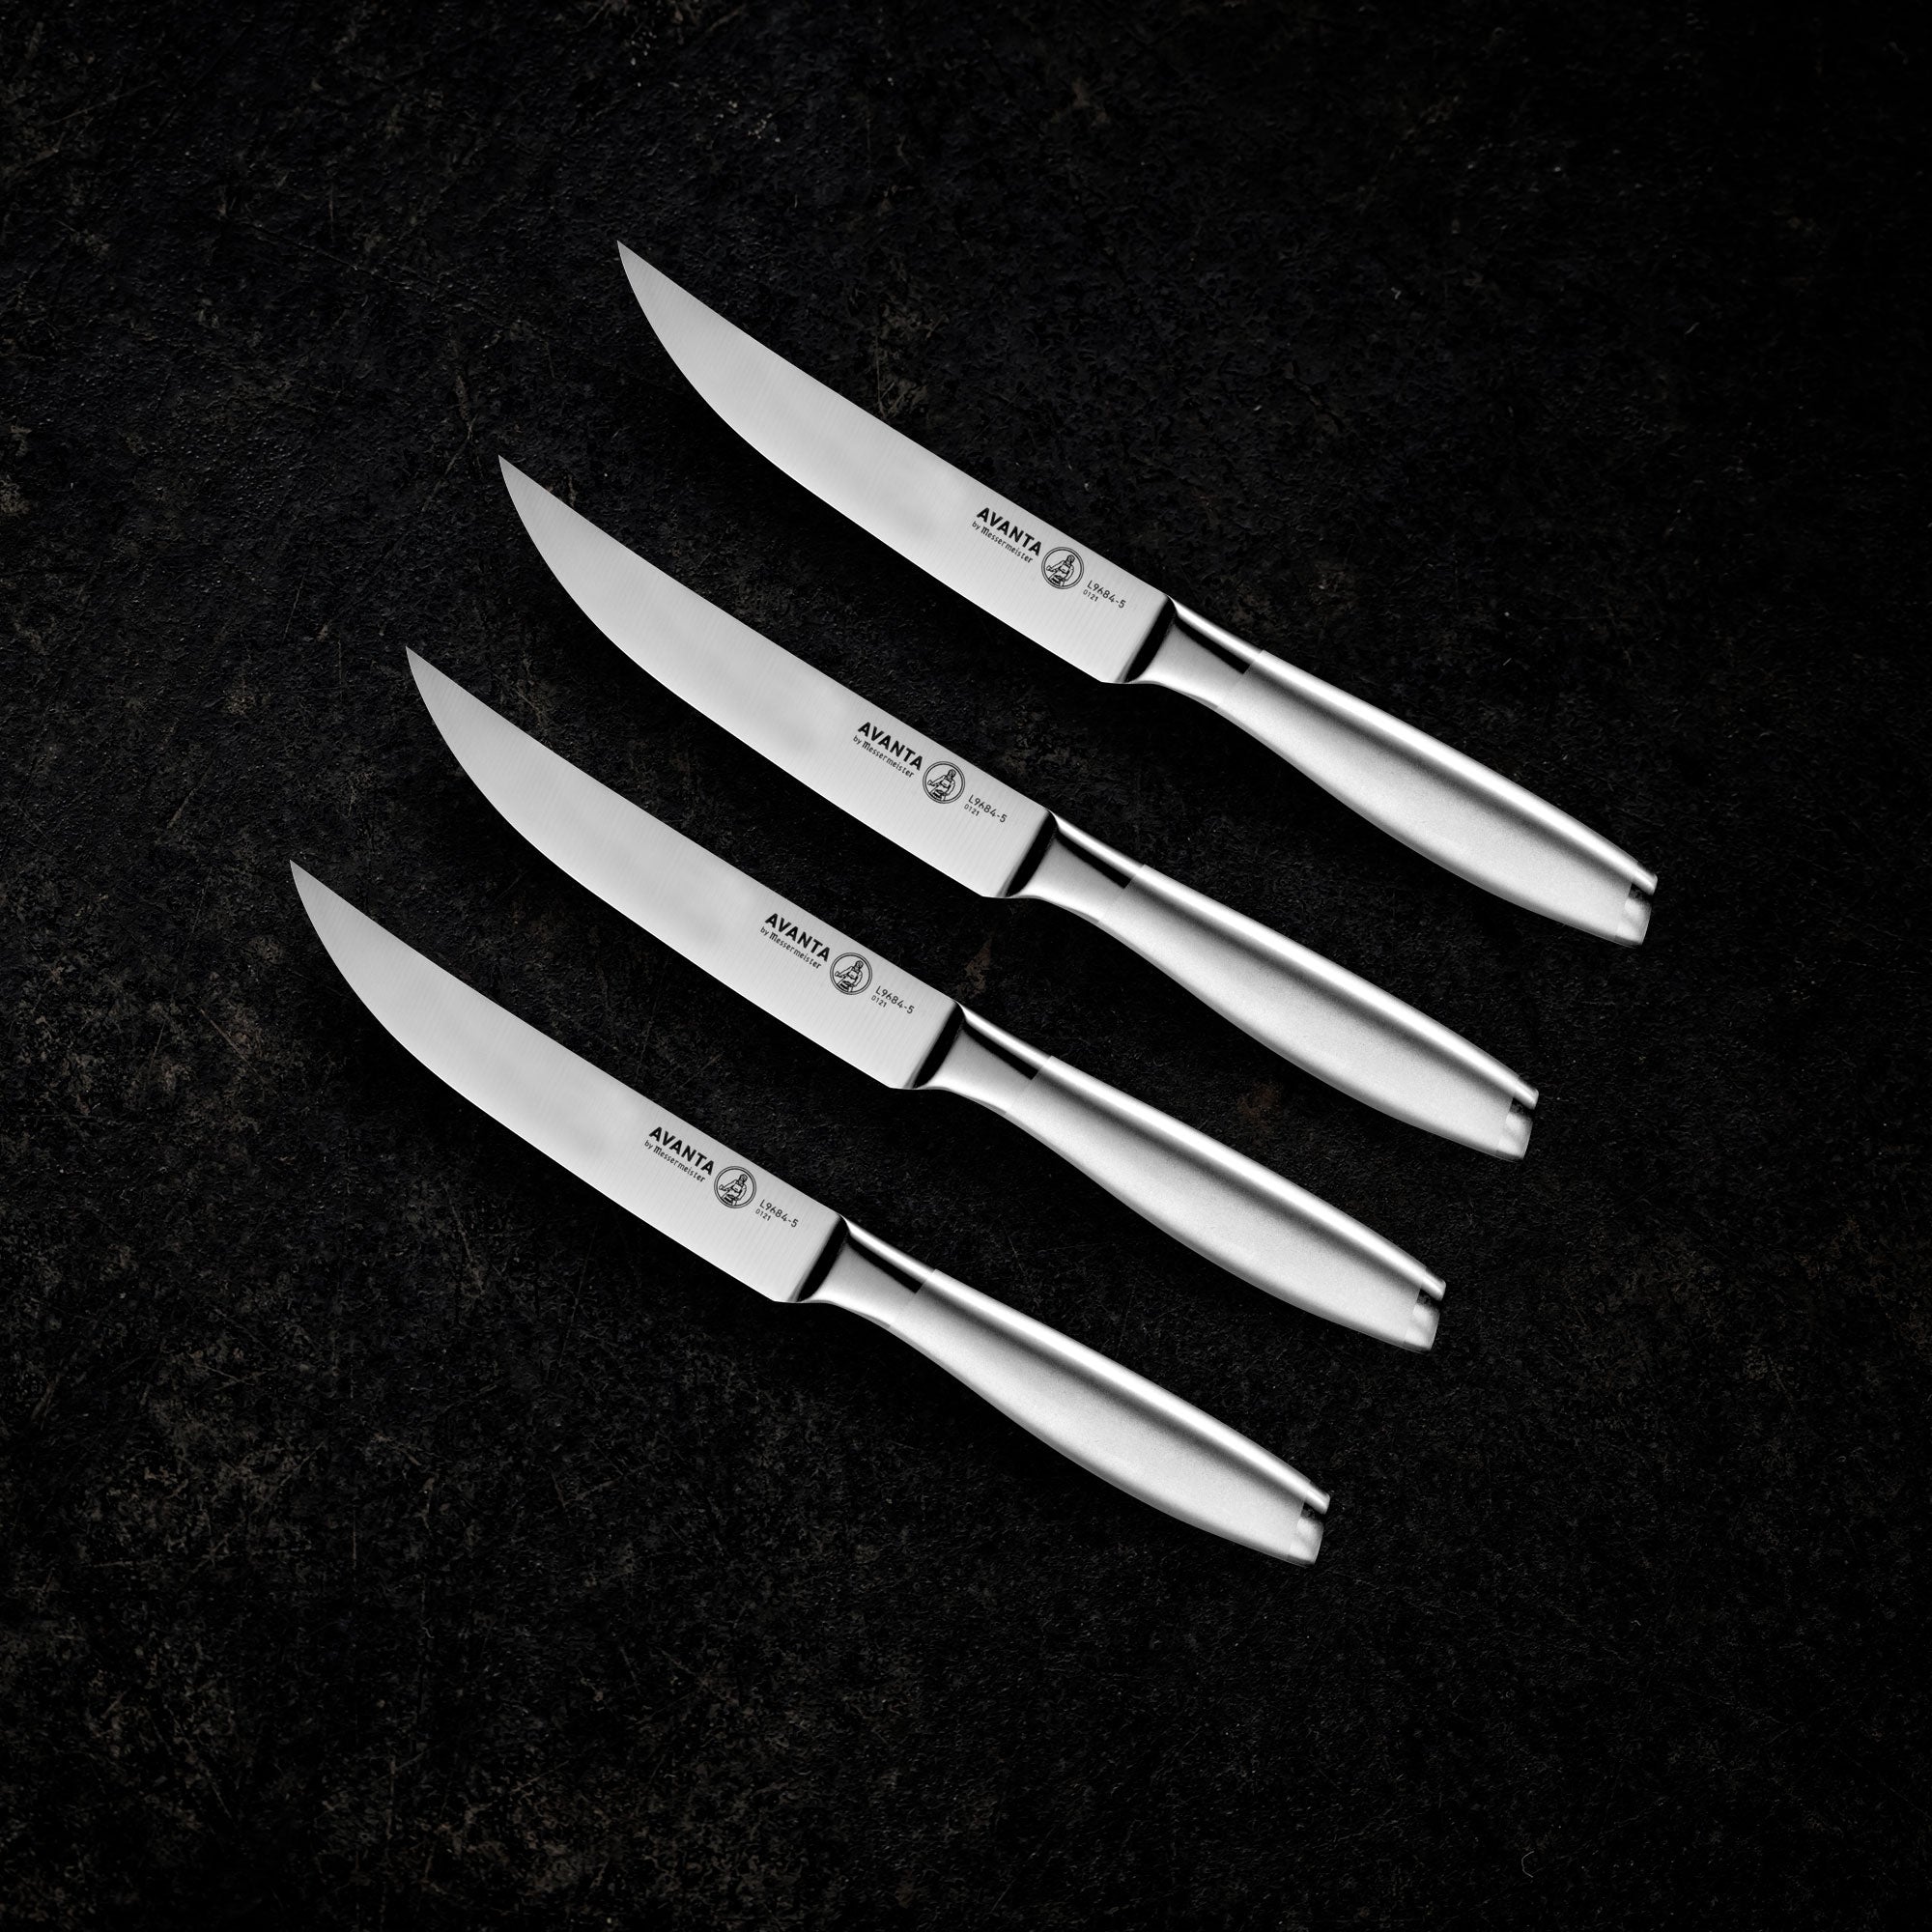 Henckels 8-pc Stainless Steel Serrated Steak Knife Set Silver